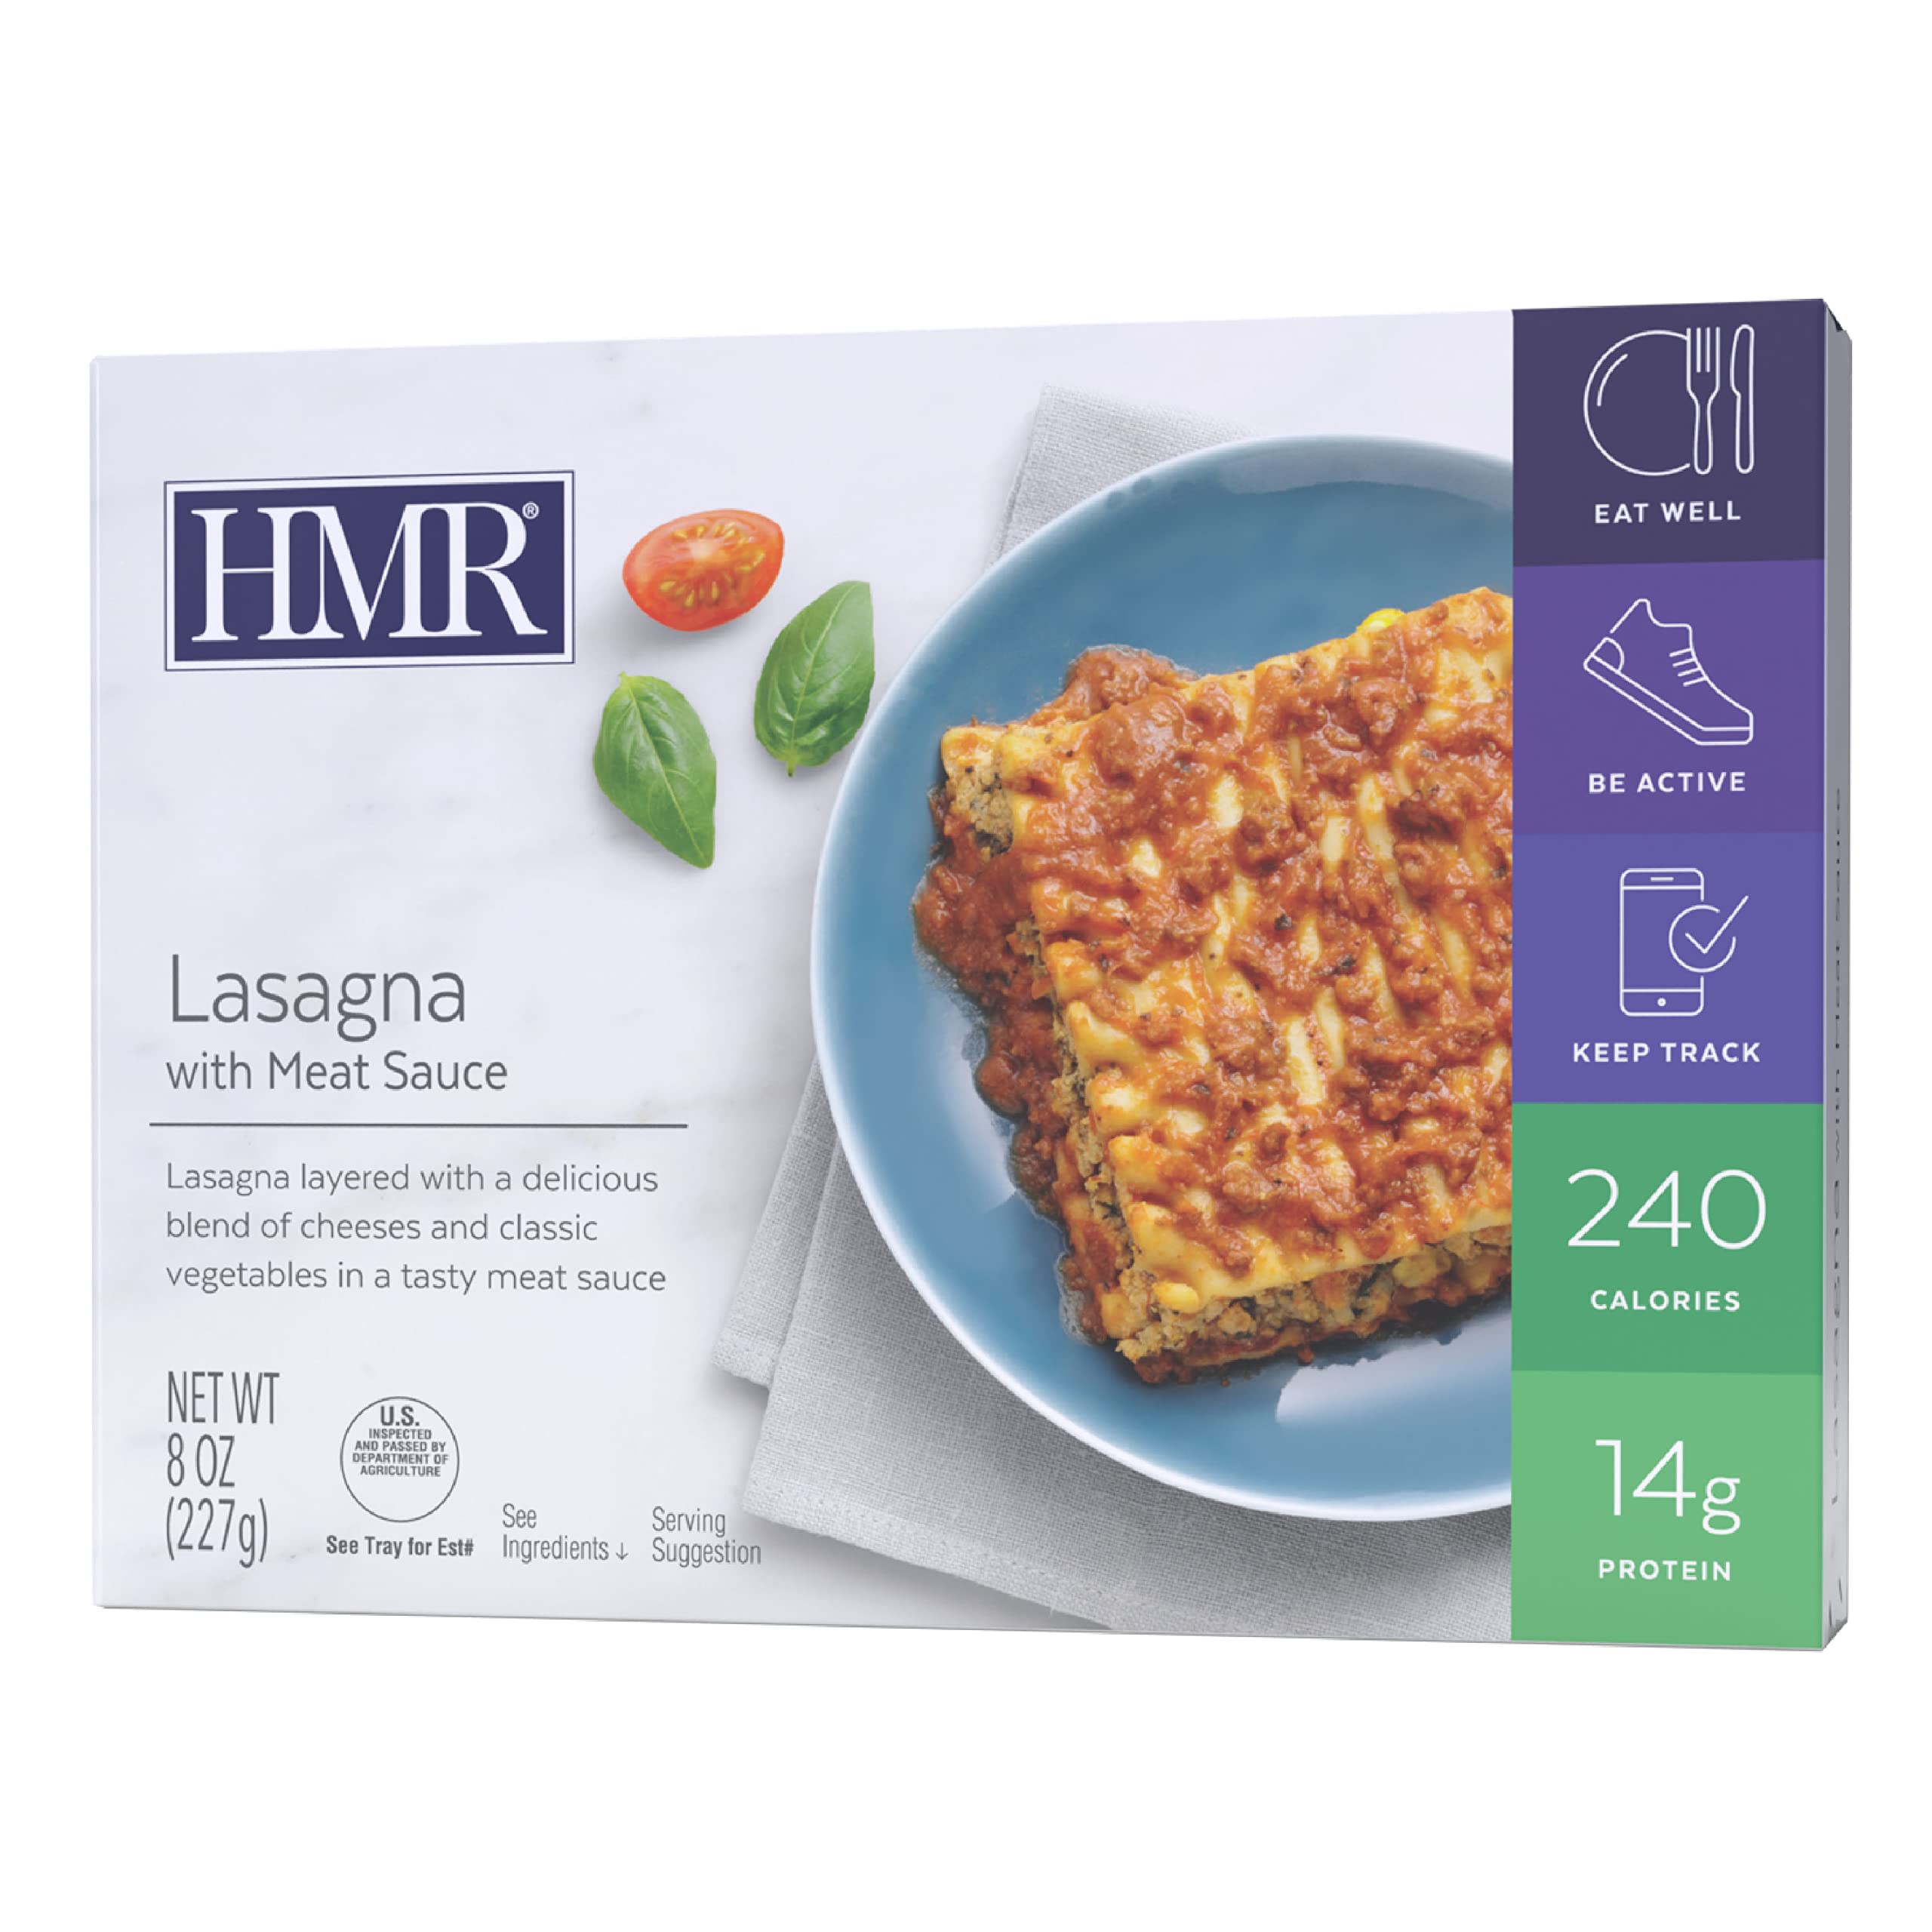 Hmr Lasagna With Meat Sauce Entrée